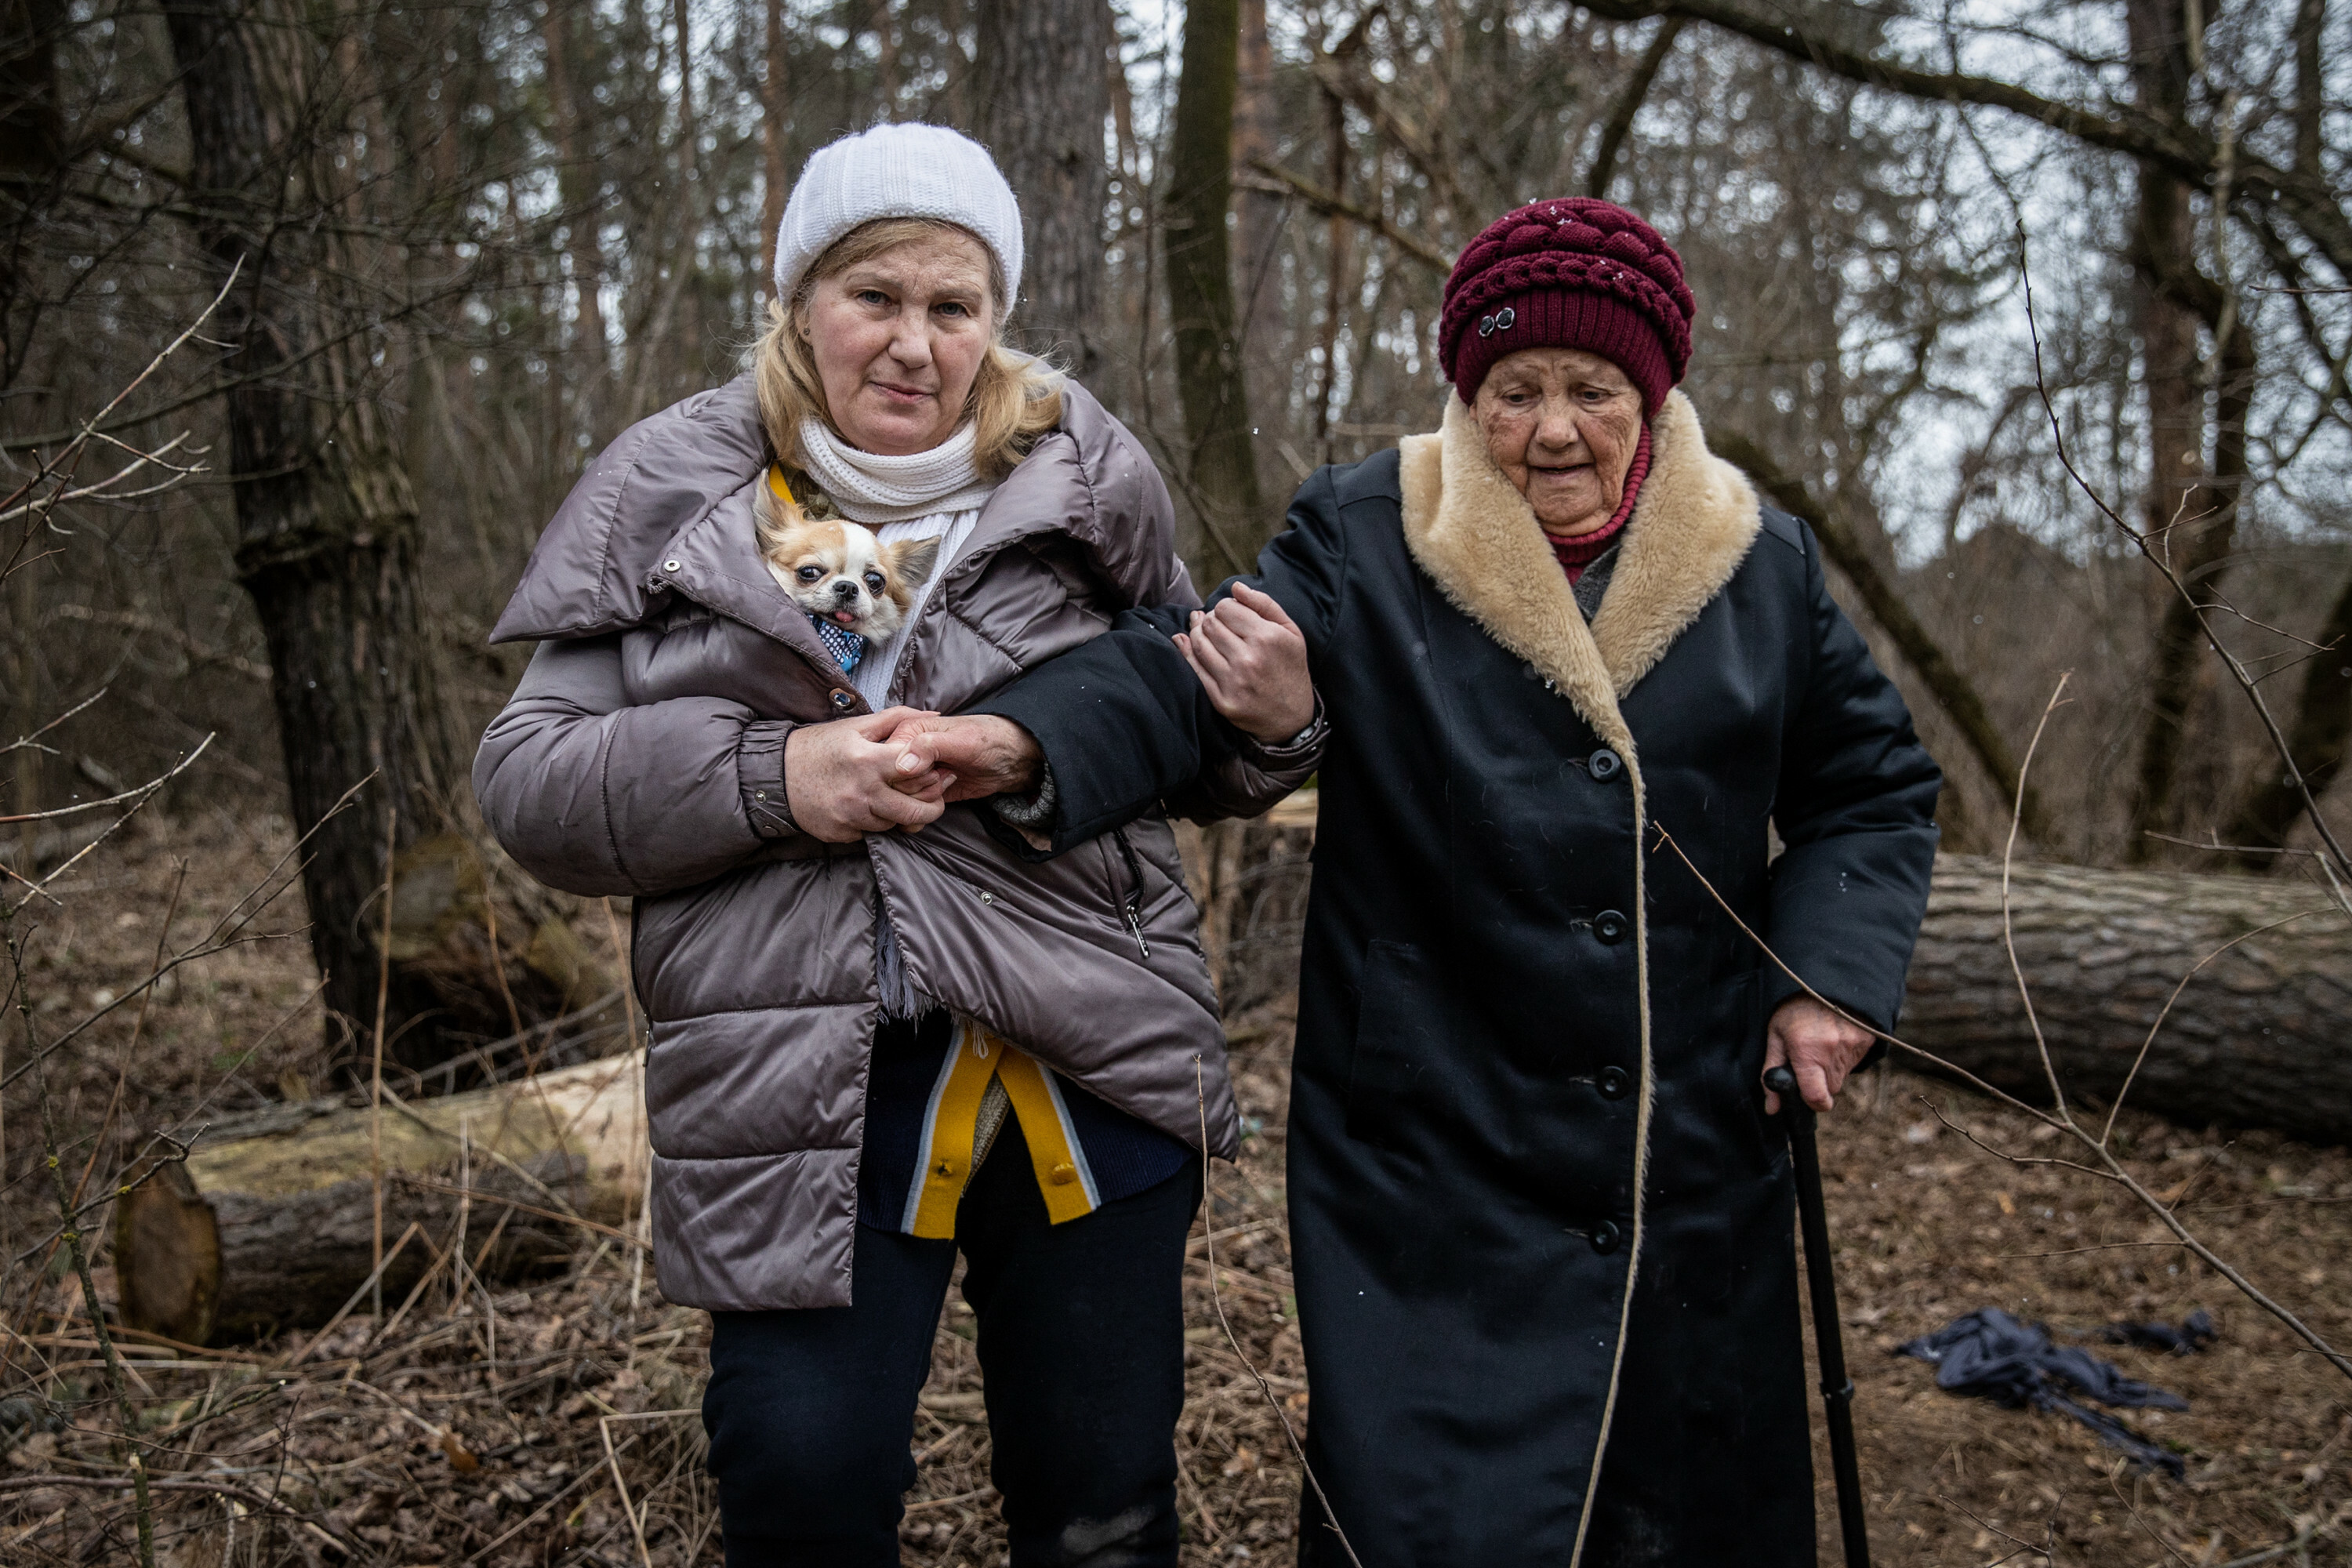 Ukrainian women confront hardest International Women's Day under shadow of Russian attacks